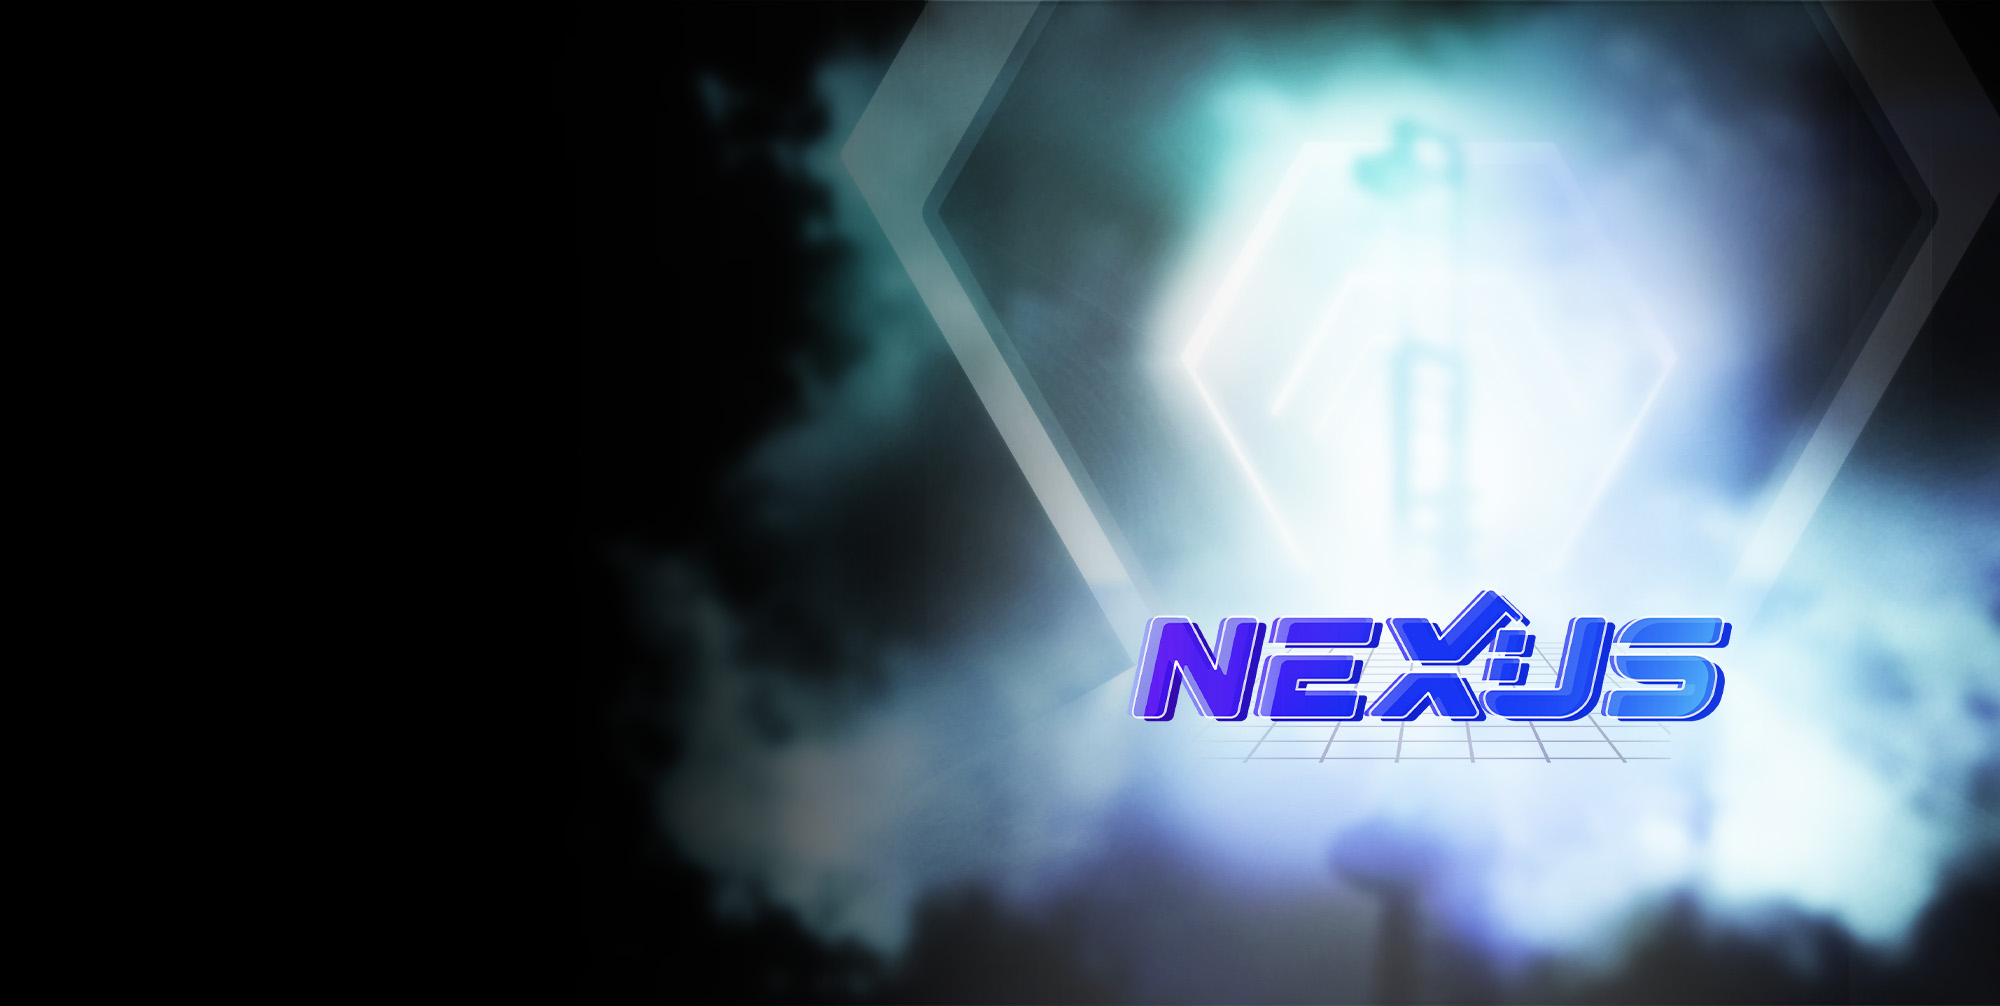 Project NEXUS